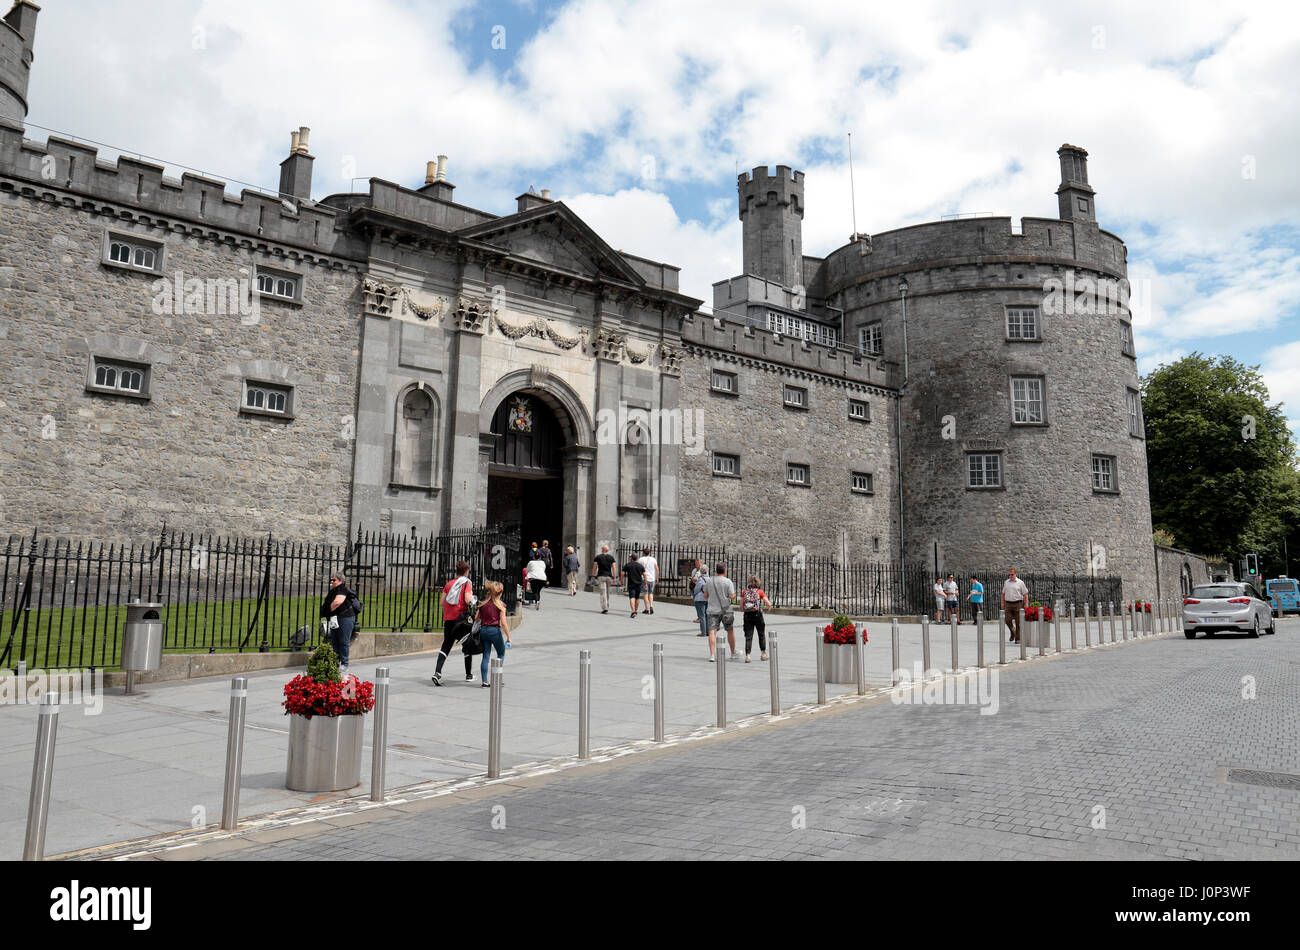 Main entrance to Kilkenny Castle, Kilkenny, Ireland (Eire). Stock Photo